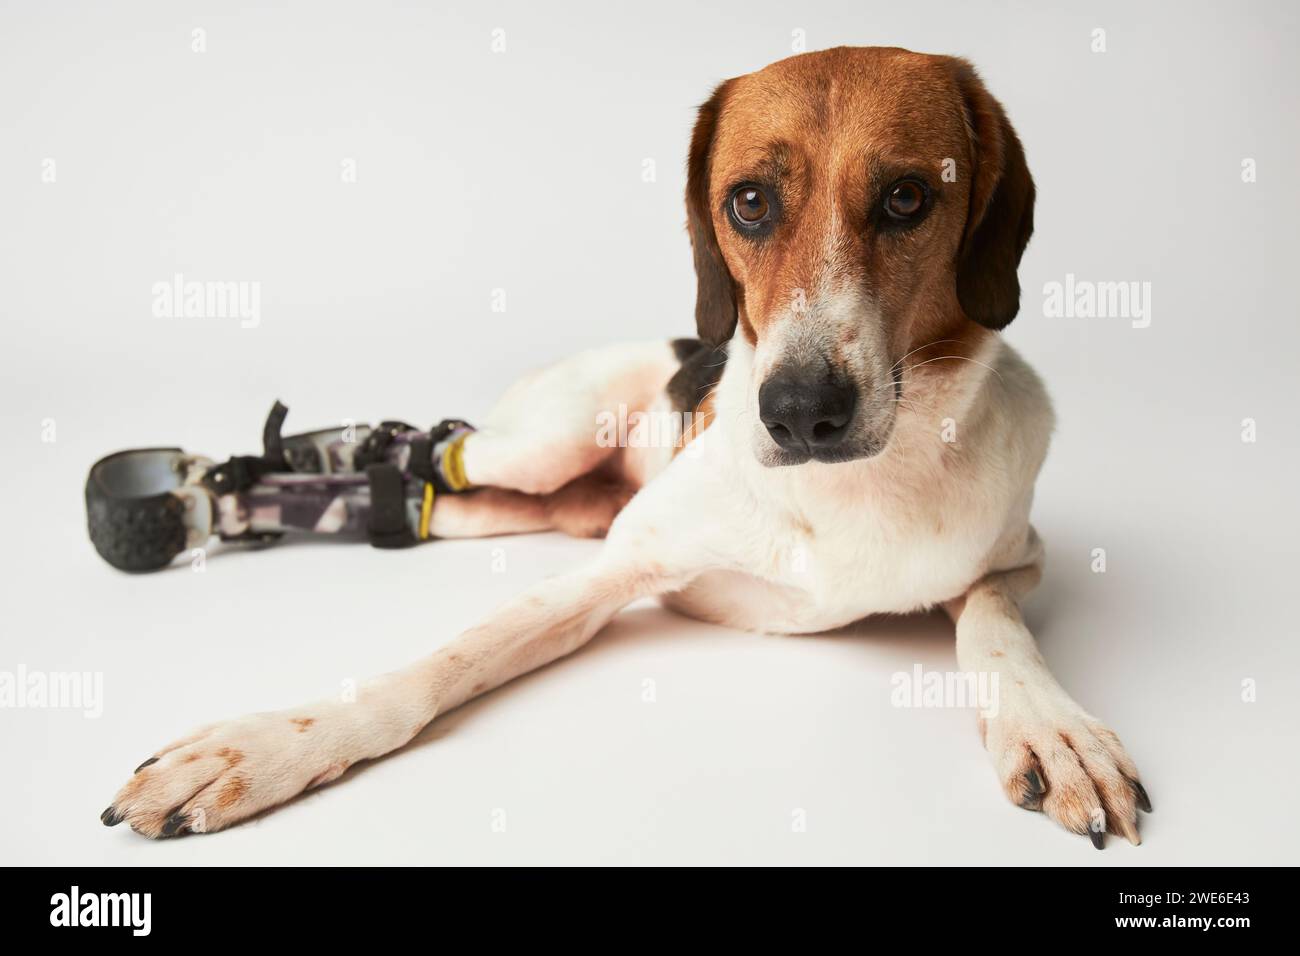 Disabled beagle dog wearing prosthetic equipment against white background Stock Photo